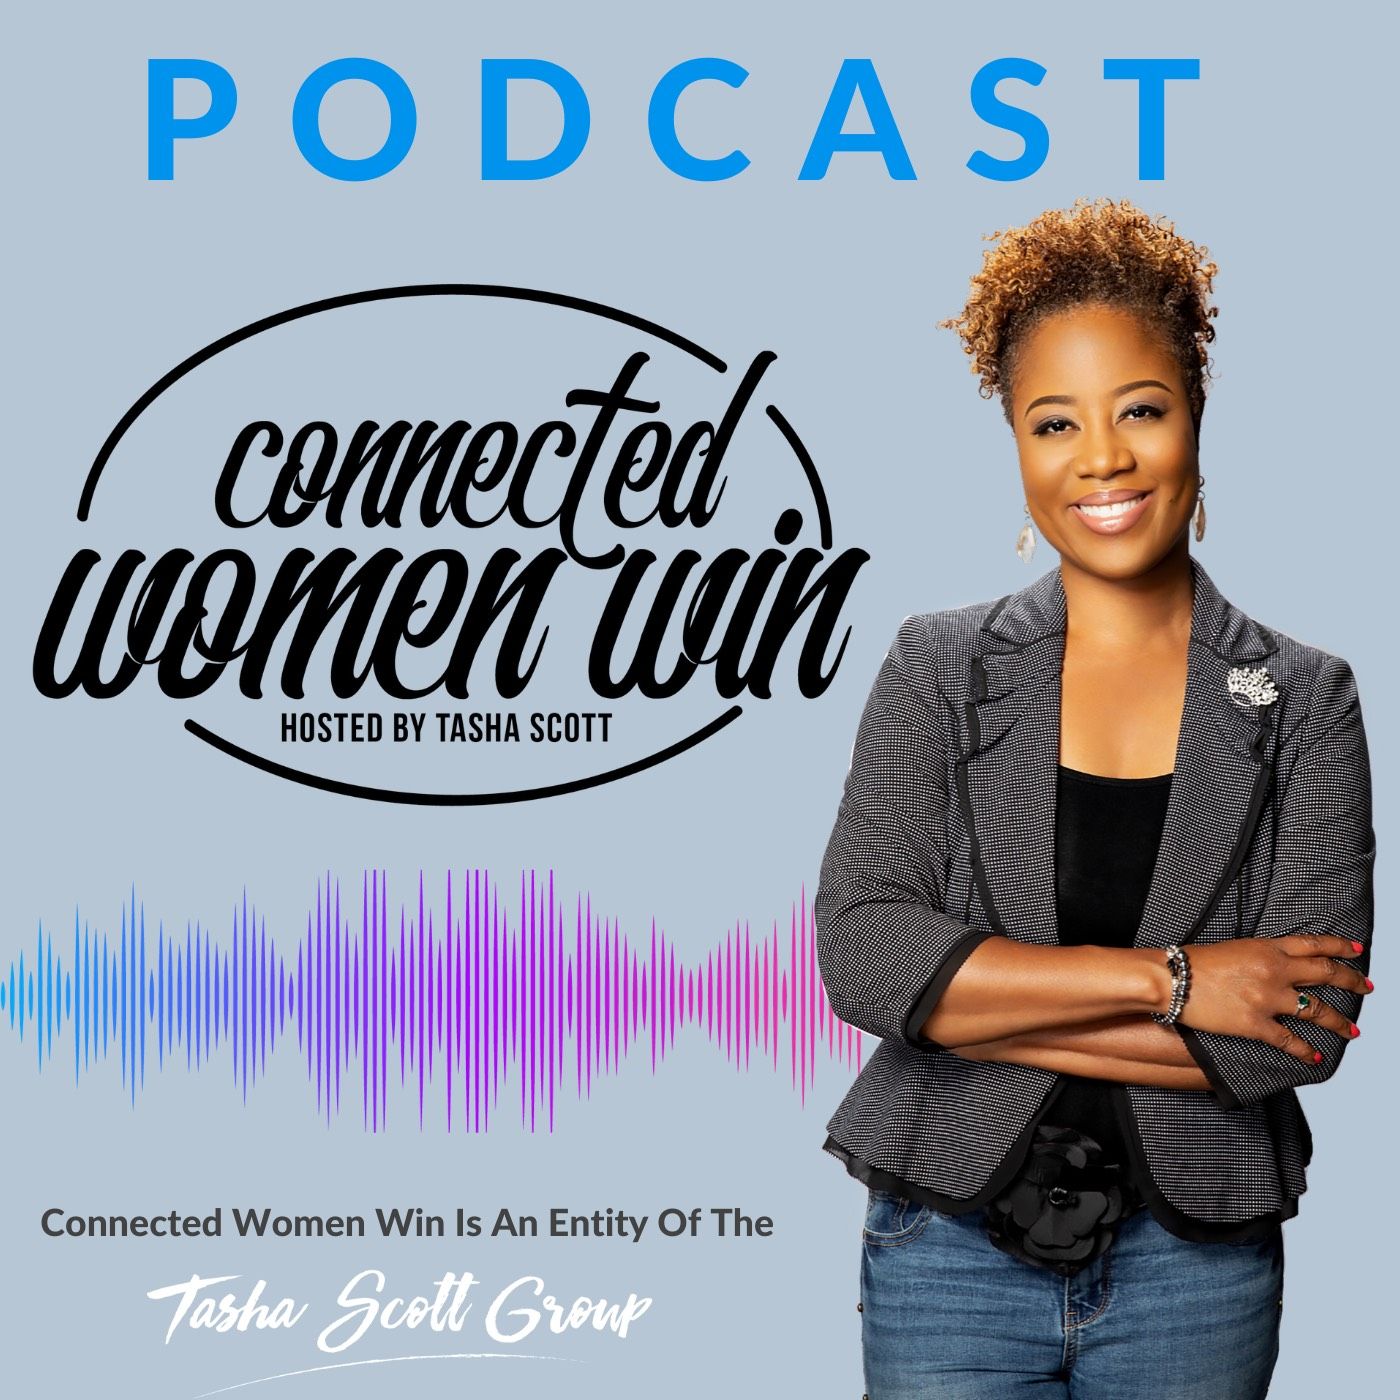 Connected Women Win